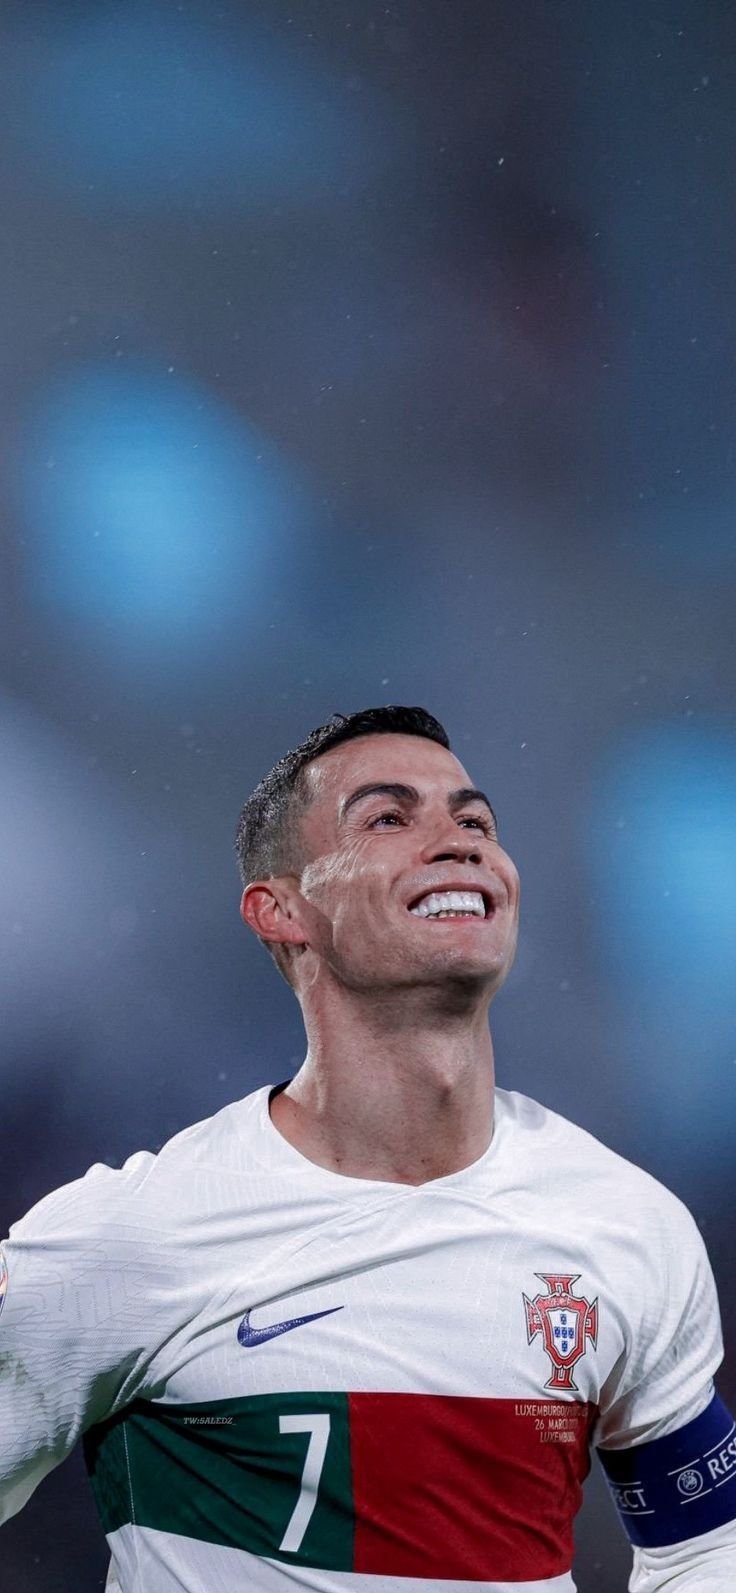 Football Player Ronaldo Images In Full Hd Wallpaper